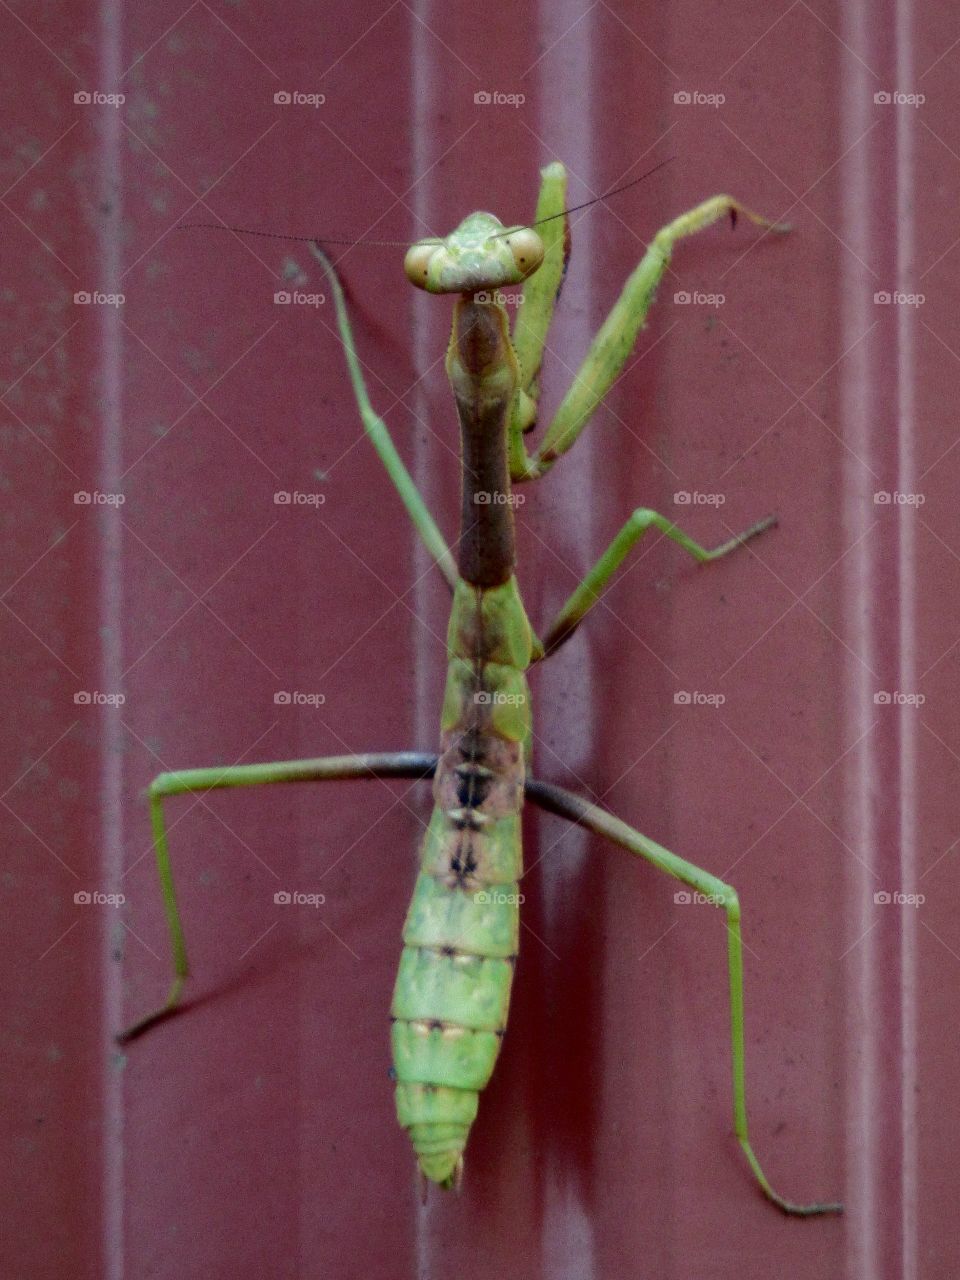 Close up of a Praying Mantis climbing on a red barn